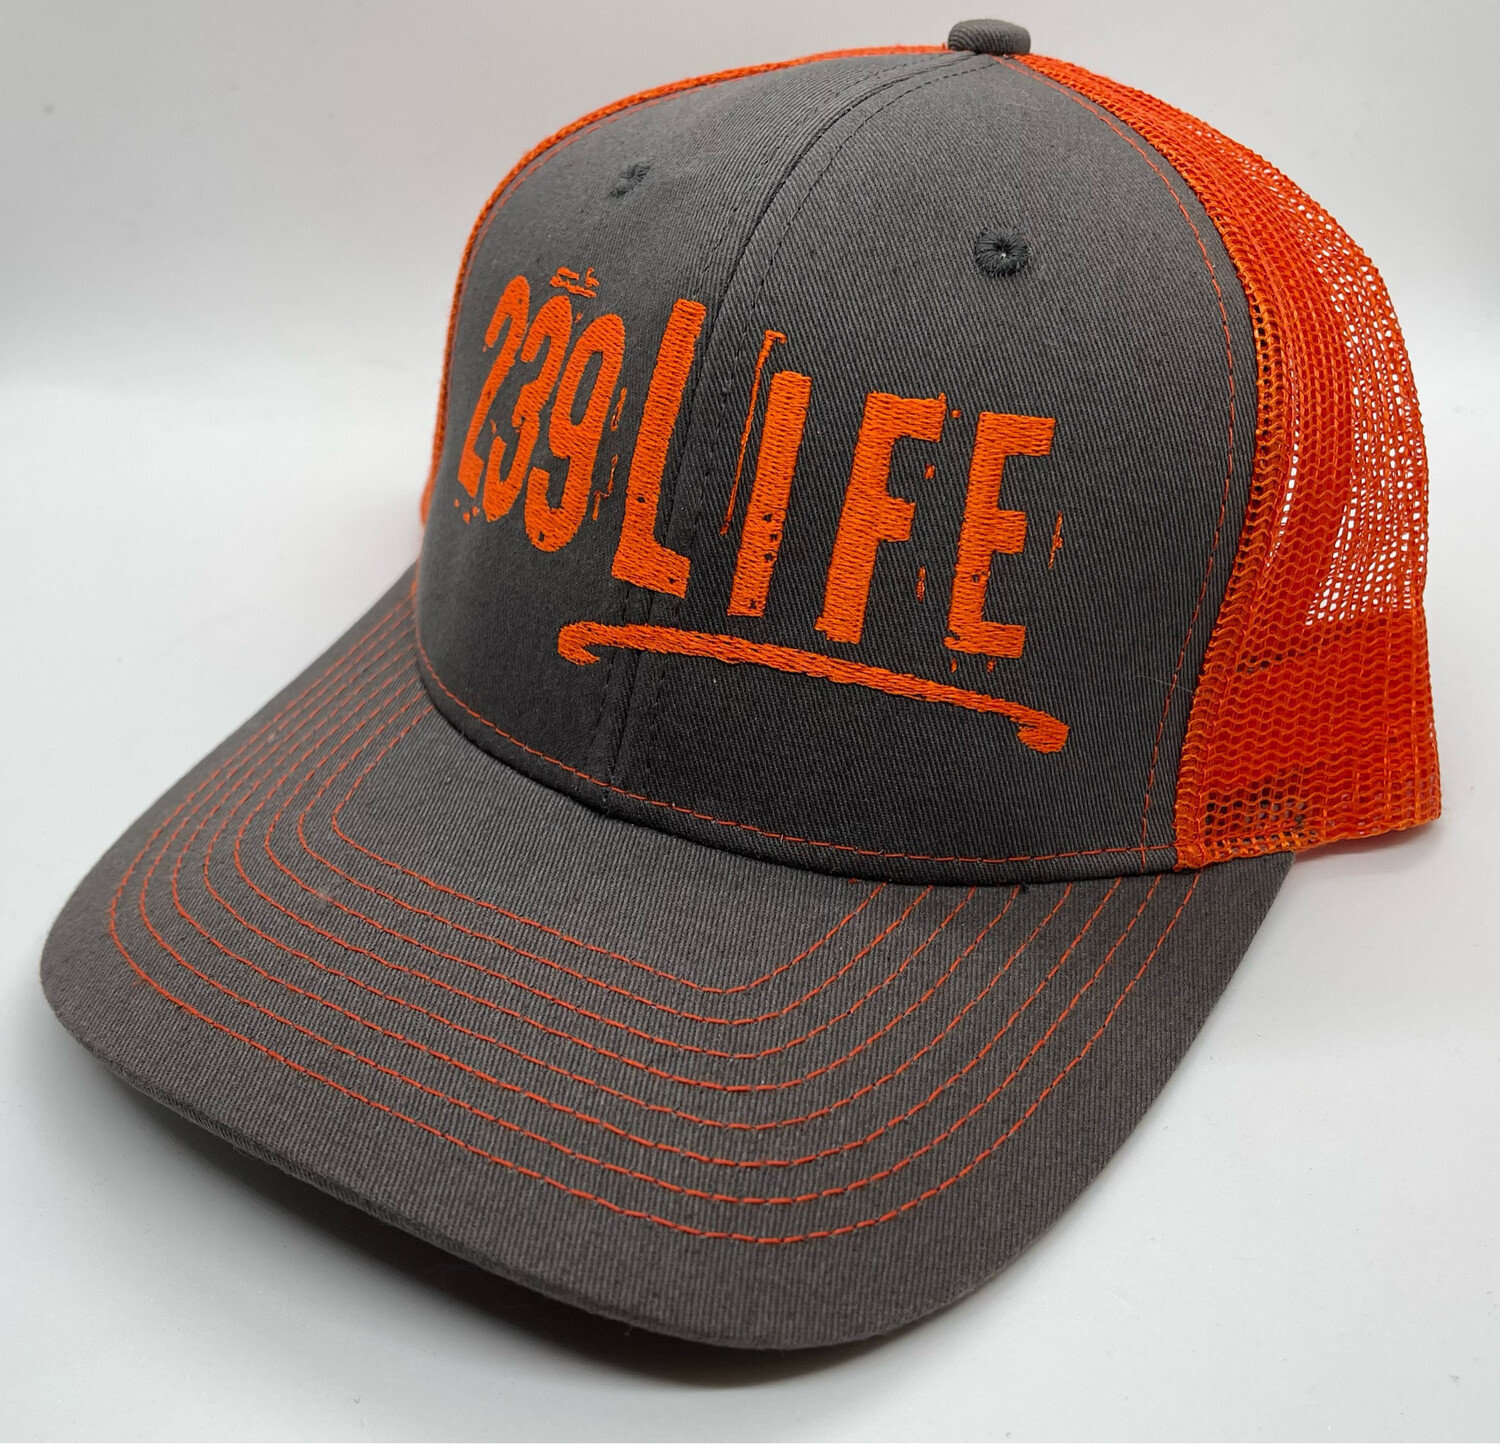 239Life Logo Hat